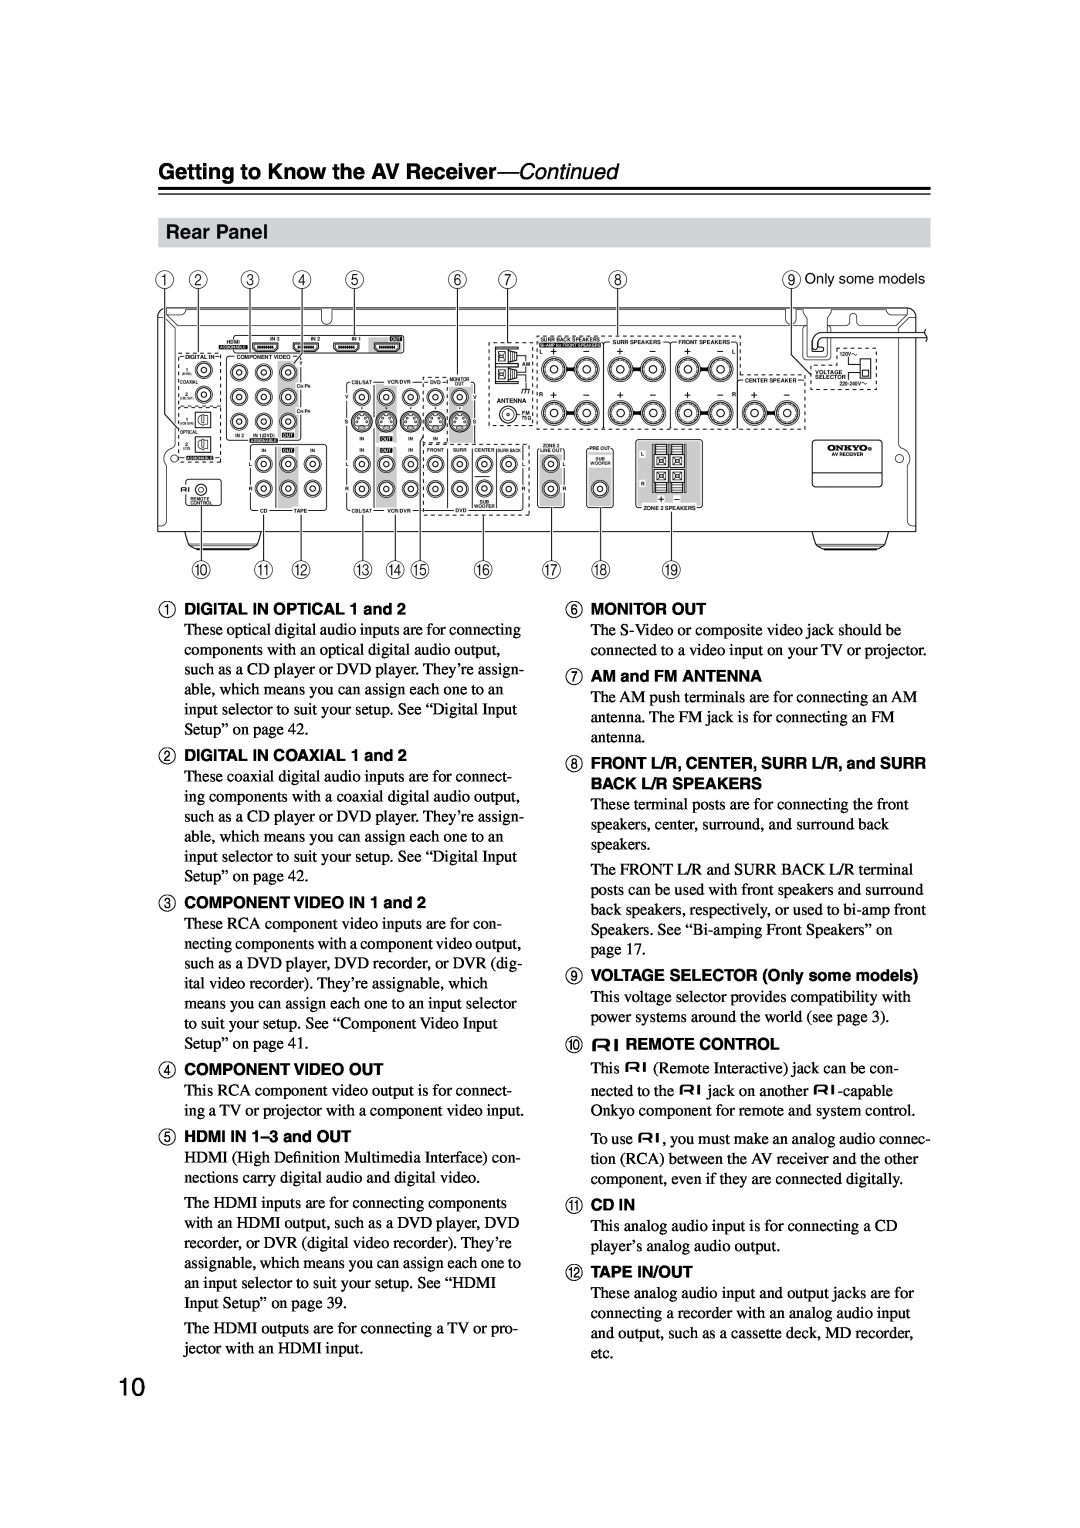 Onkyo TX-SR506, TX-SR576 Rear Panel, Getting to Know the AV Receiver—Continued, 1 2 3 4, J K L, M No P, Q R S 